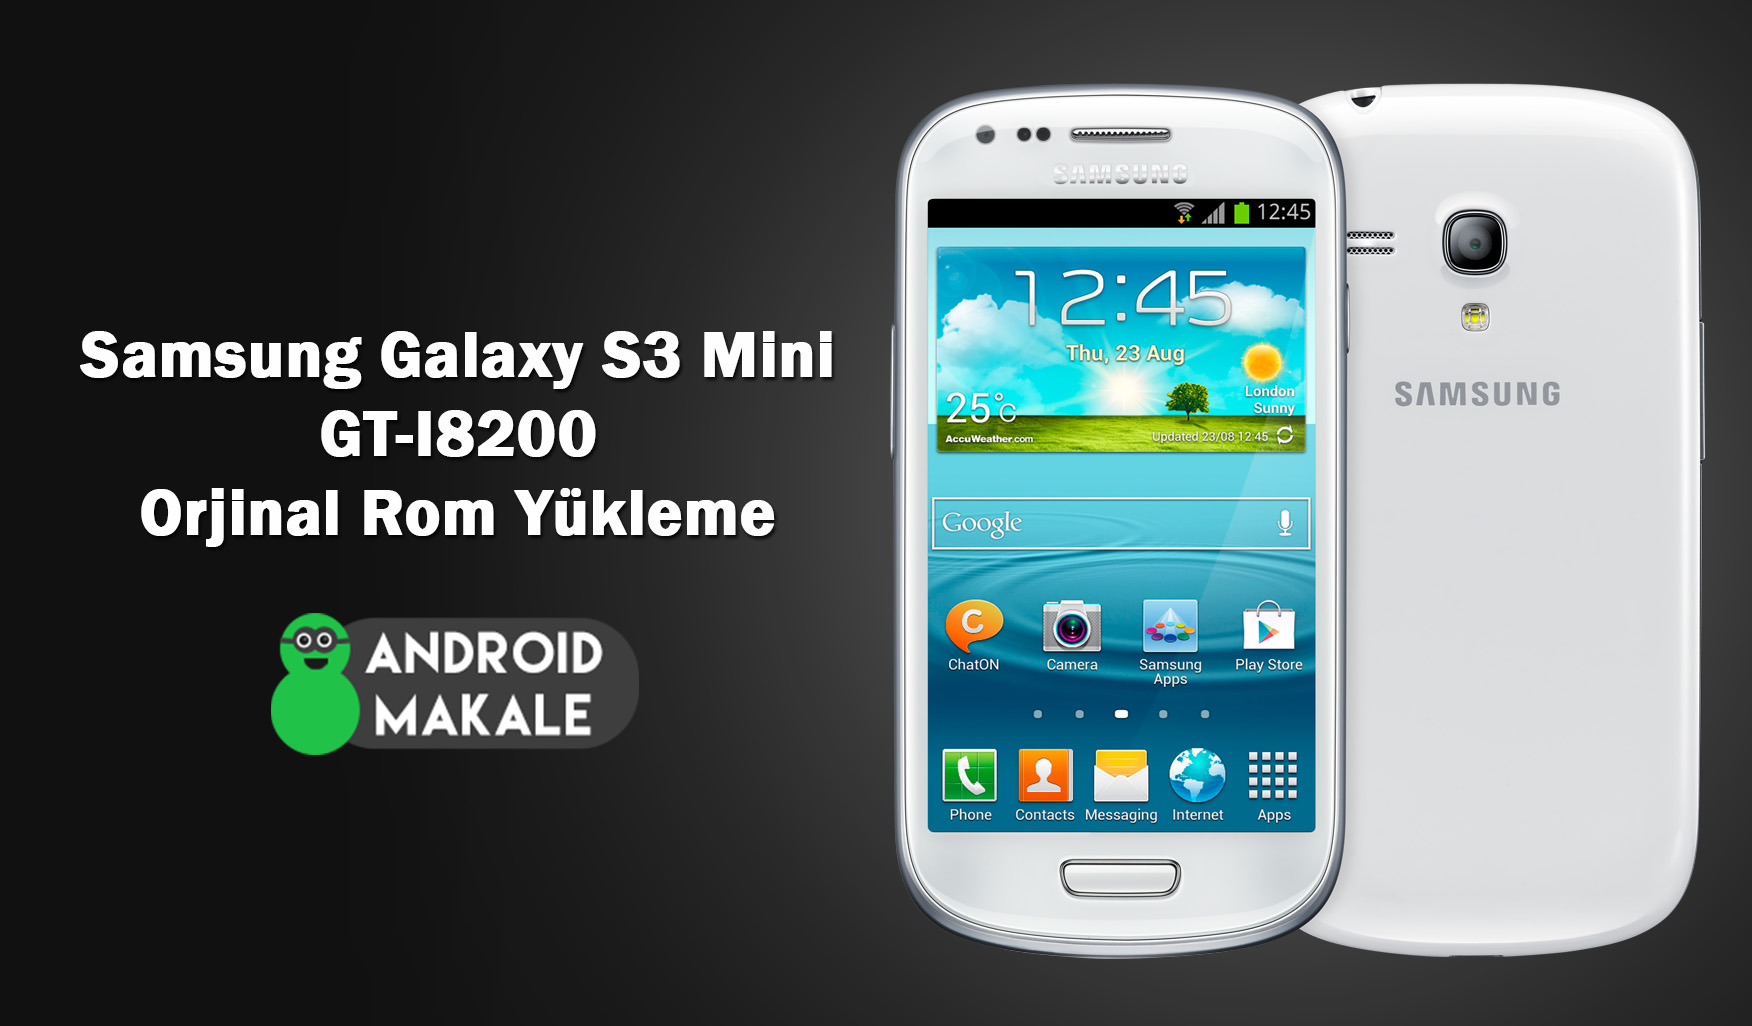 Samsung Galaxy S3 Mini (GT-I8200) Android 4.2.2 Orjinal Rom Yükleme s3 mini i8200 stock rom indir s3 mini i8200 orjinal rom yükleme i8200 rom download i8200 orjinal rom indir gt-i8200 rom yükleme galaxy s3 mini i8200 stok rom yükleme android makale 